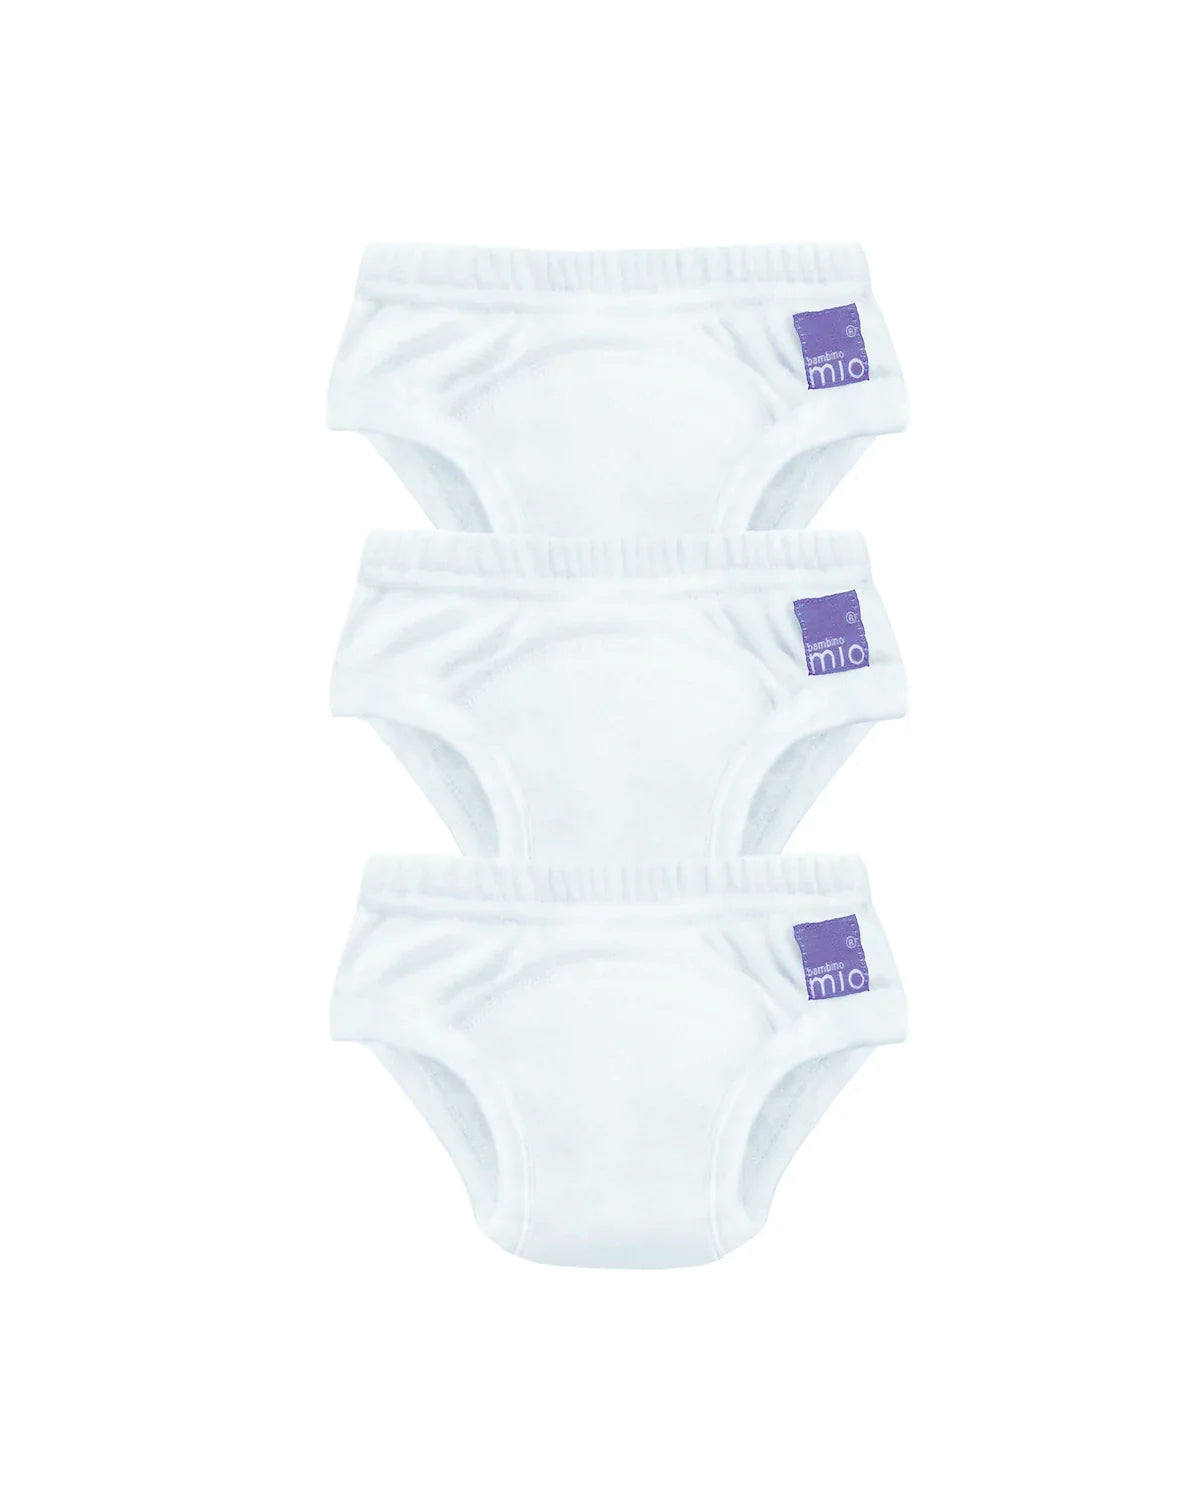 Revolutionary Reusable potty training pants, 3 pack - Bambino Mio (UK & IE)